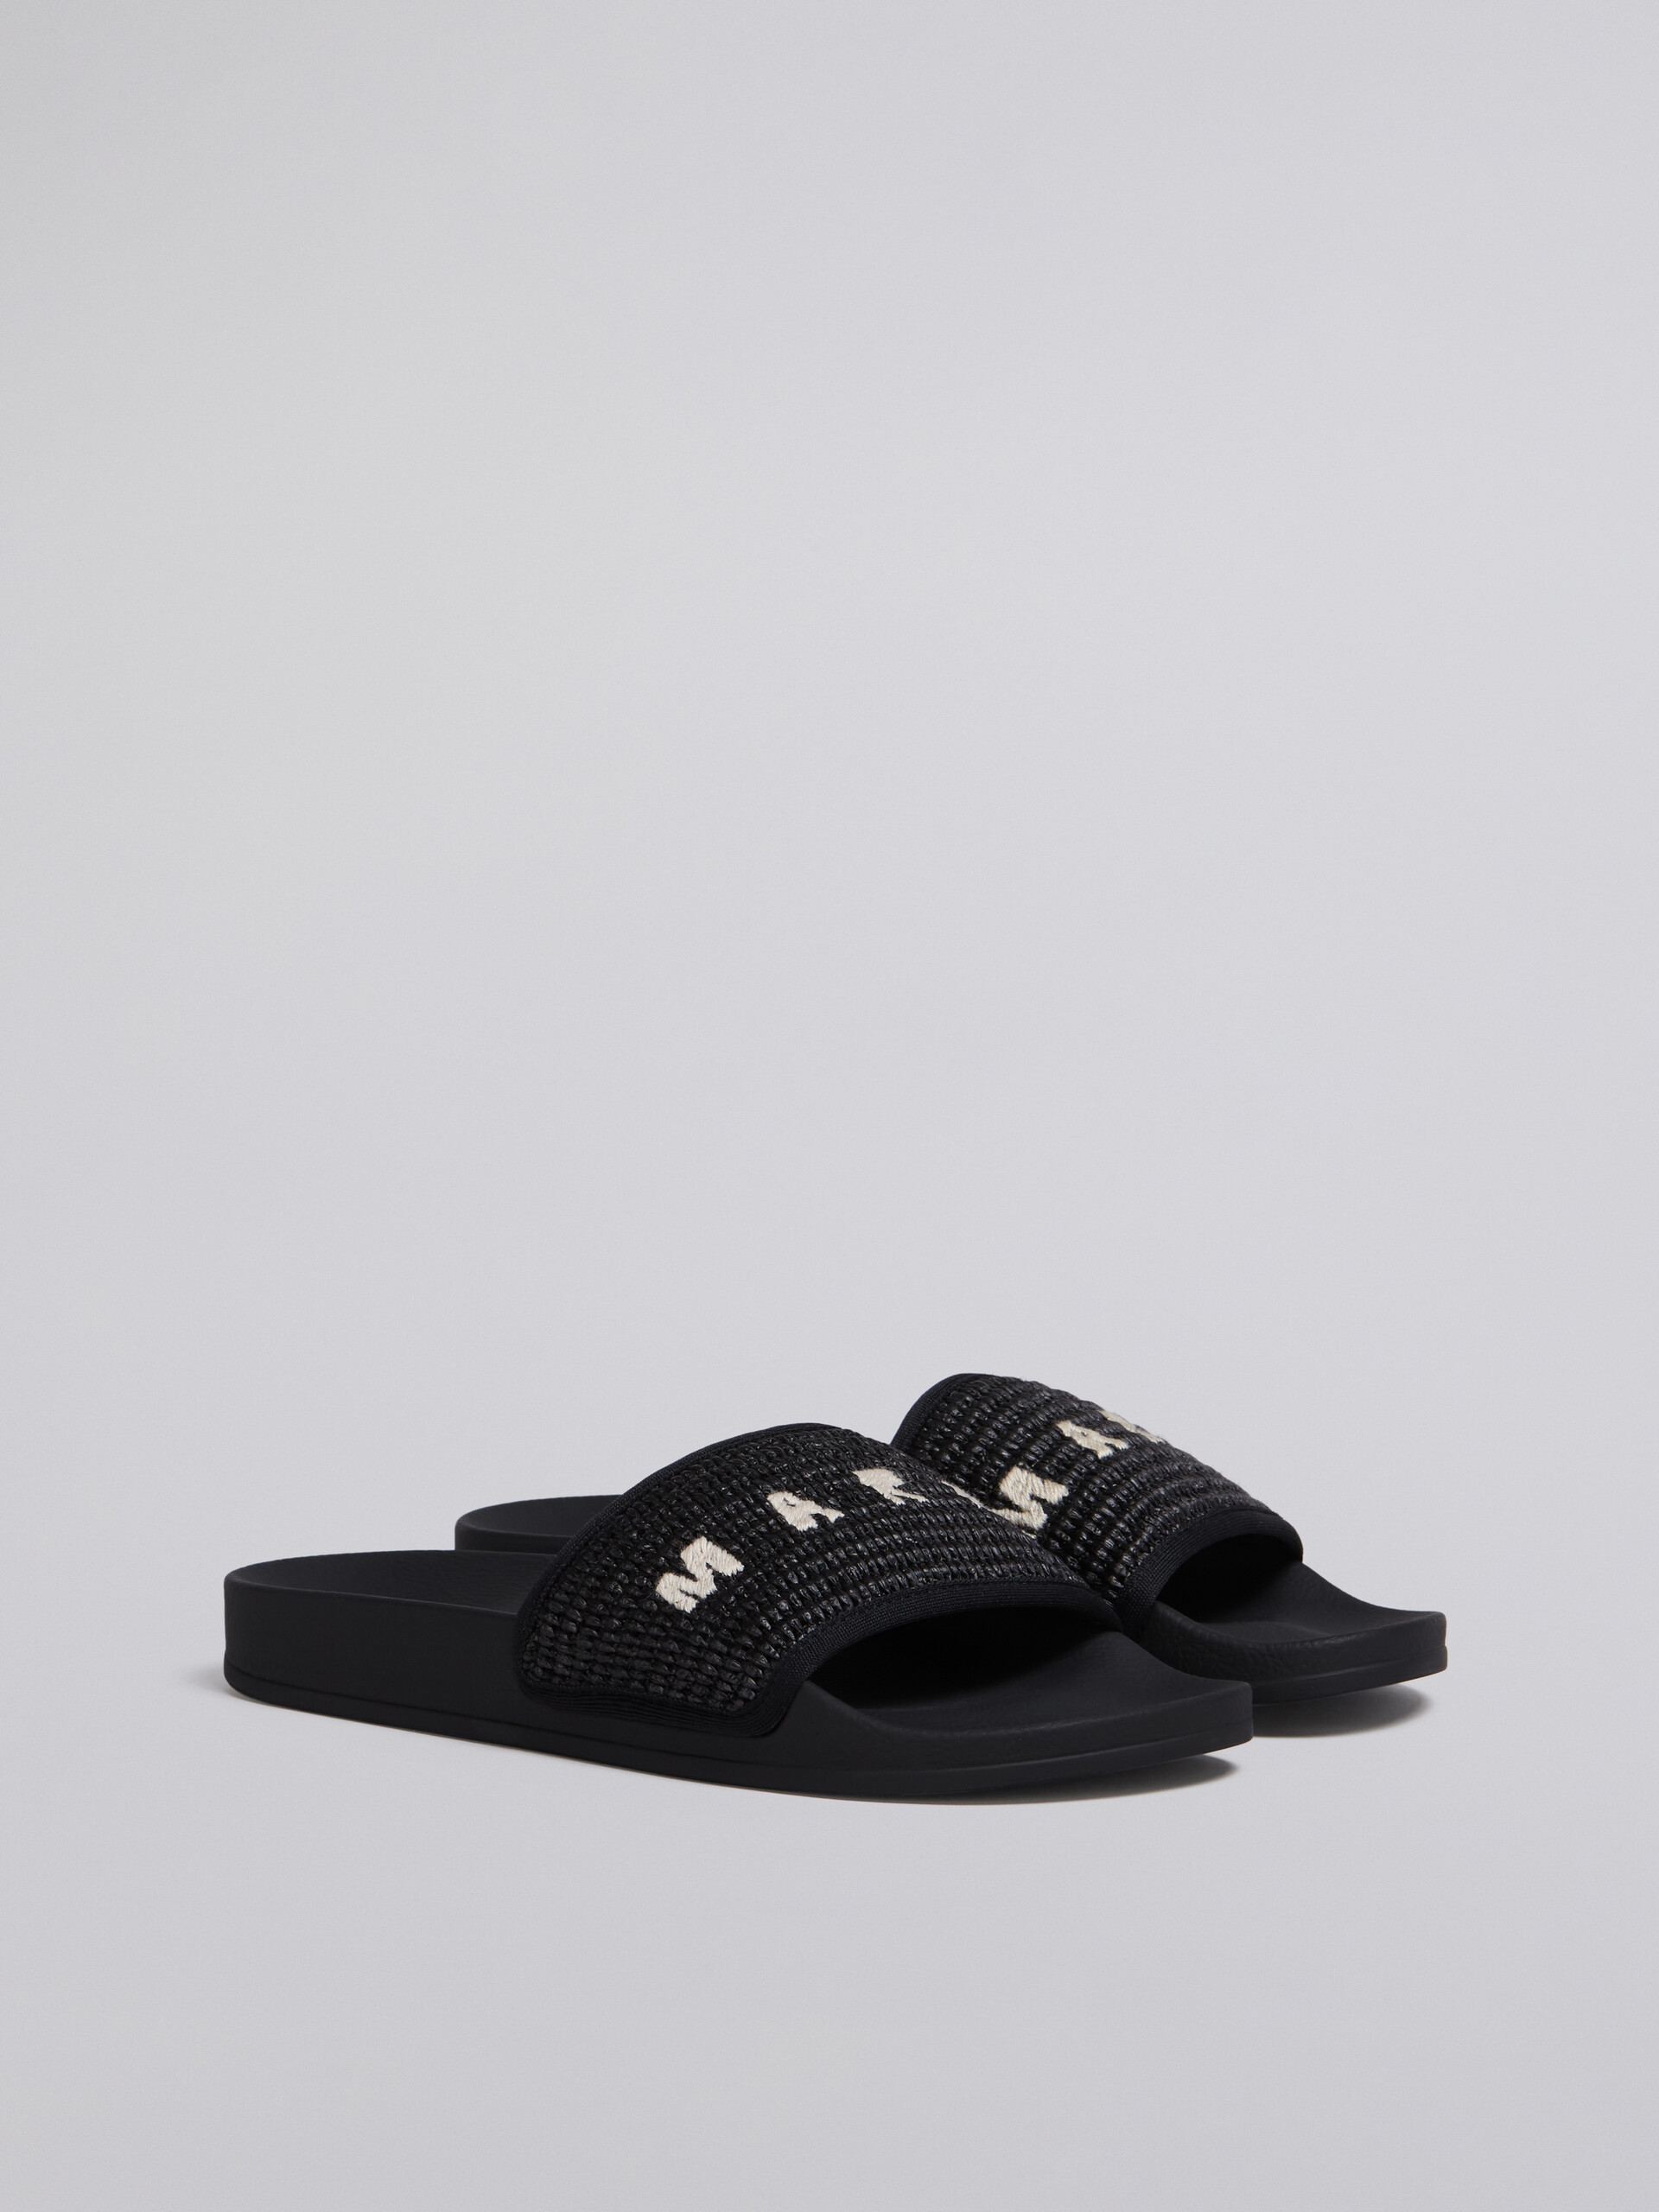 Black raffia sandal - Sandals - Image 2